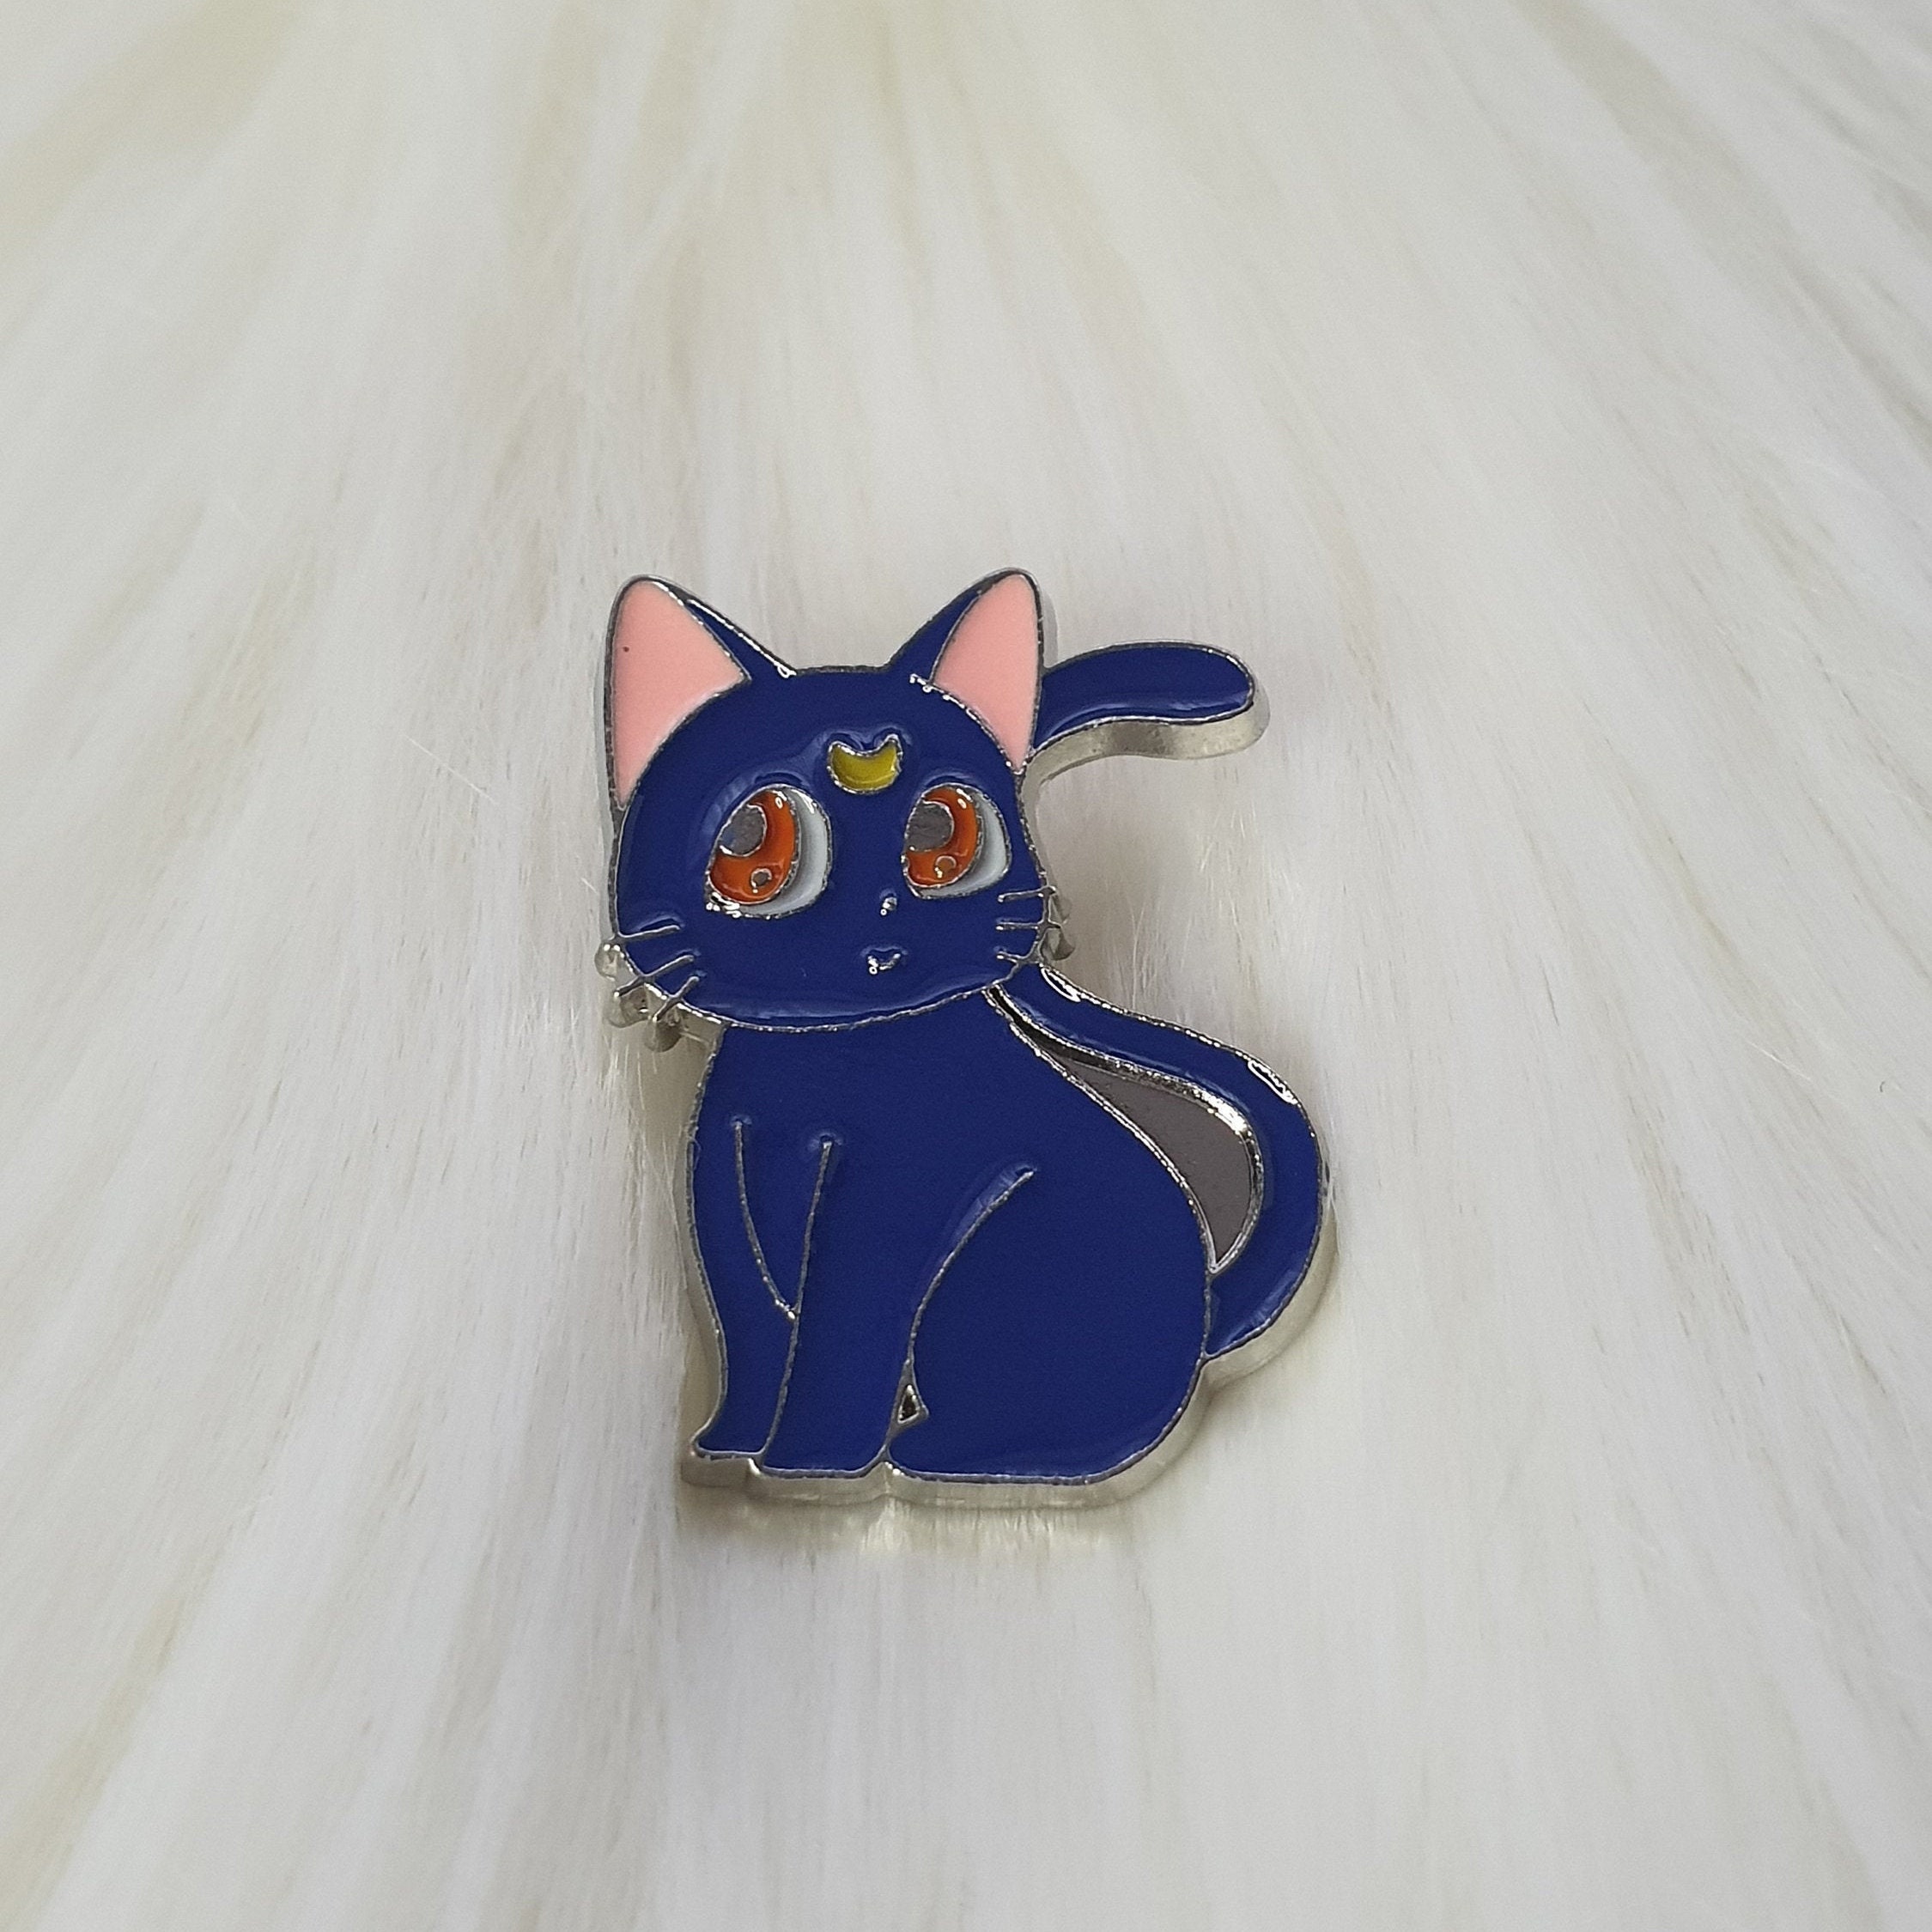 Luna Enamel Pin Sailor Moon Black Cat - Etsy